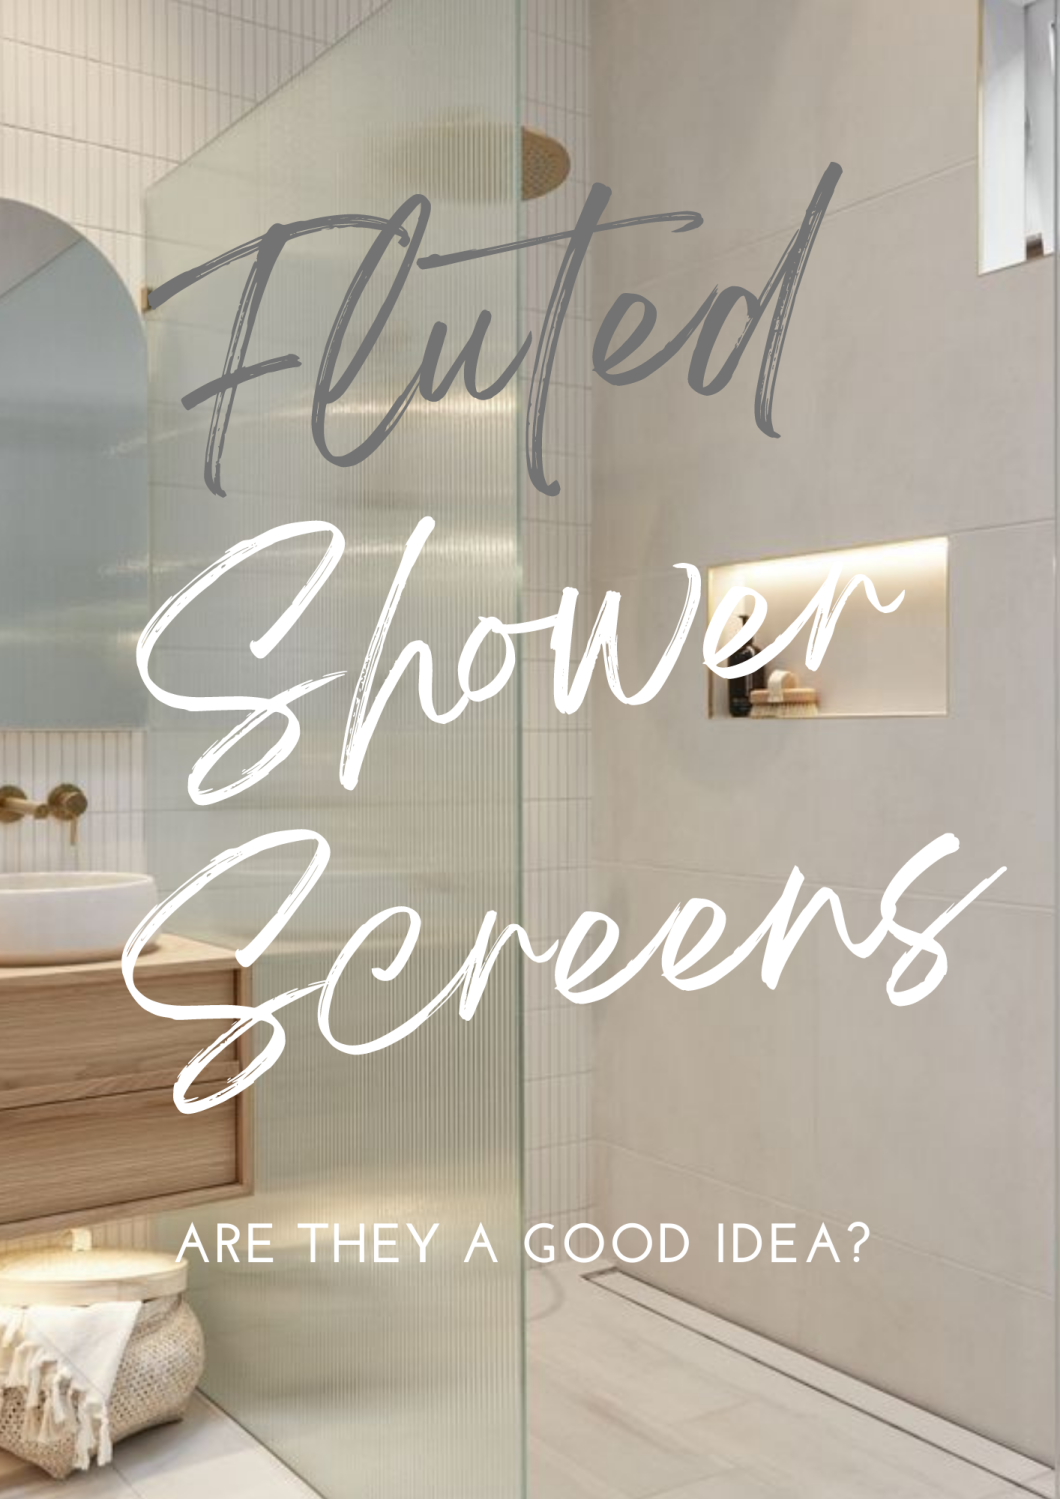 Fluted Shower Screens